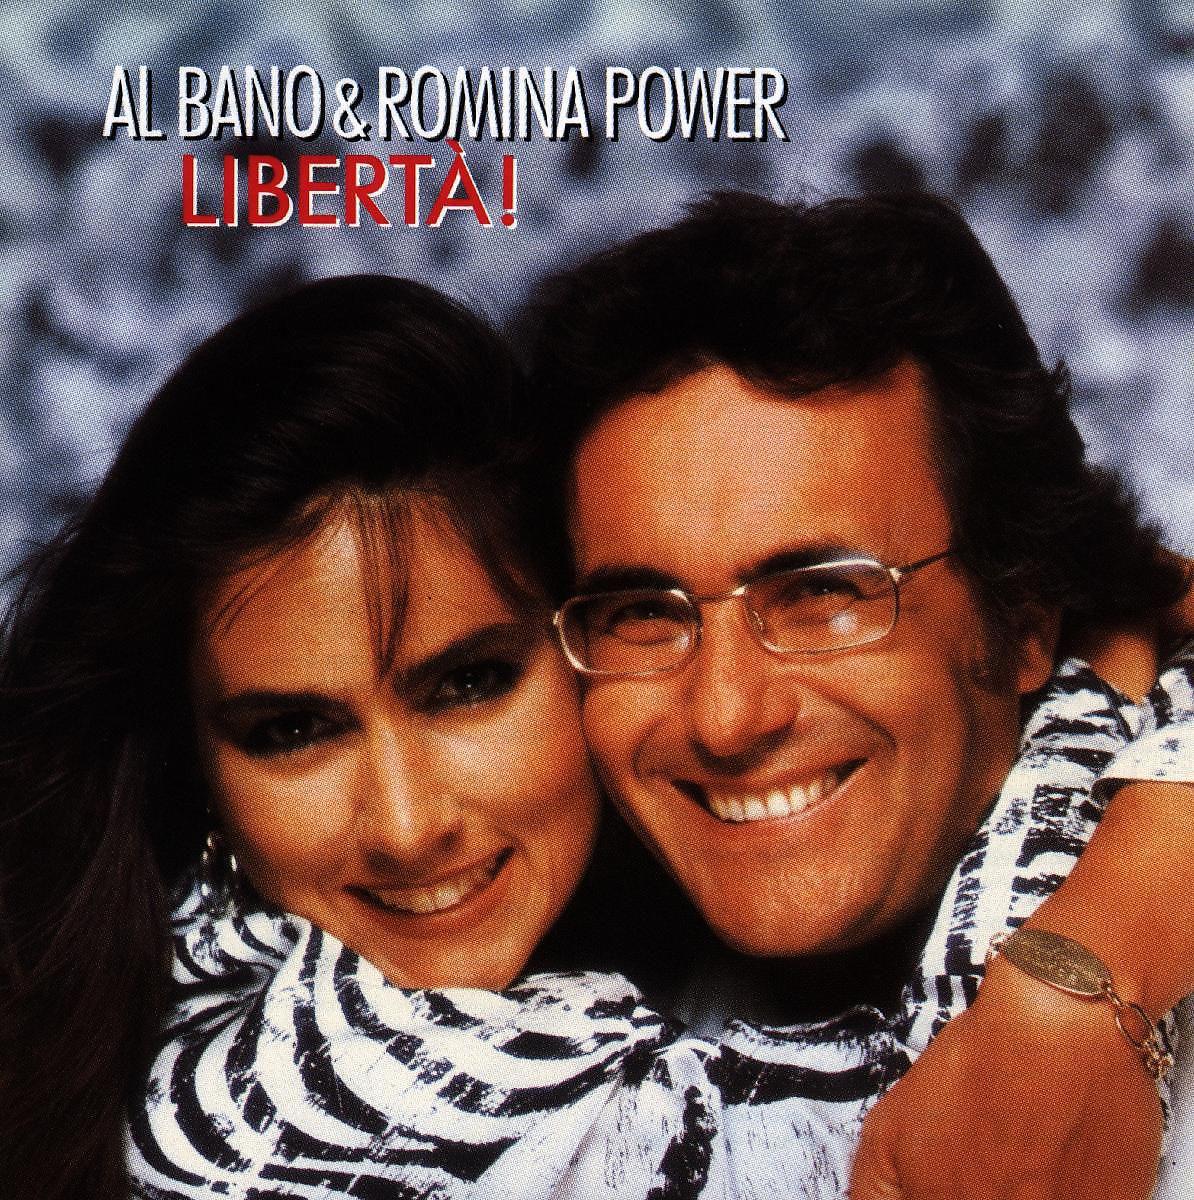 Аль бано и ромина пауэр песни слушать. Аль Бано и Ромина Пауэр. Аль Бано и Ромина Liberta. Al bano & Romina Power Liberta 1987 LP. Аль Бано и Ромина - Либерта.